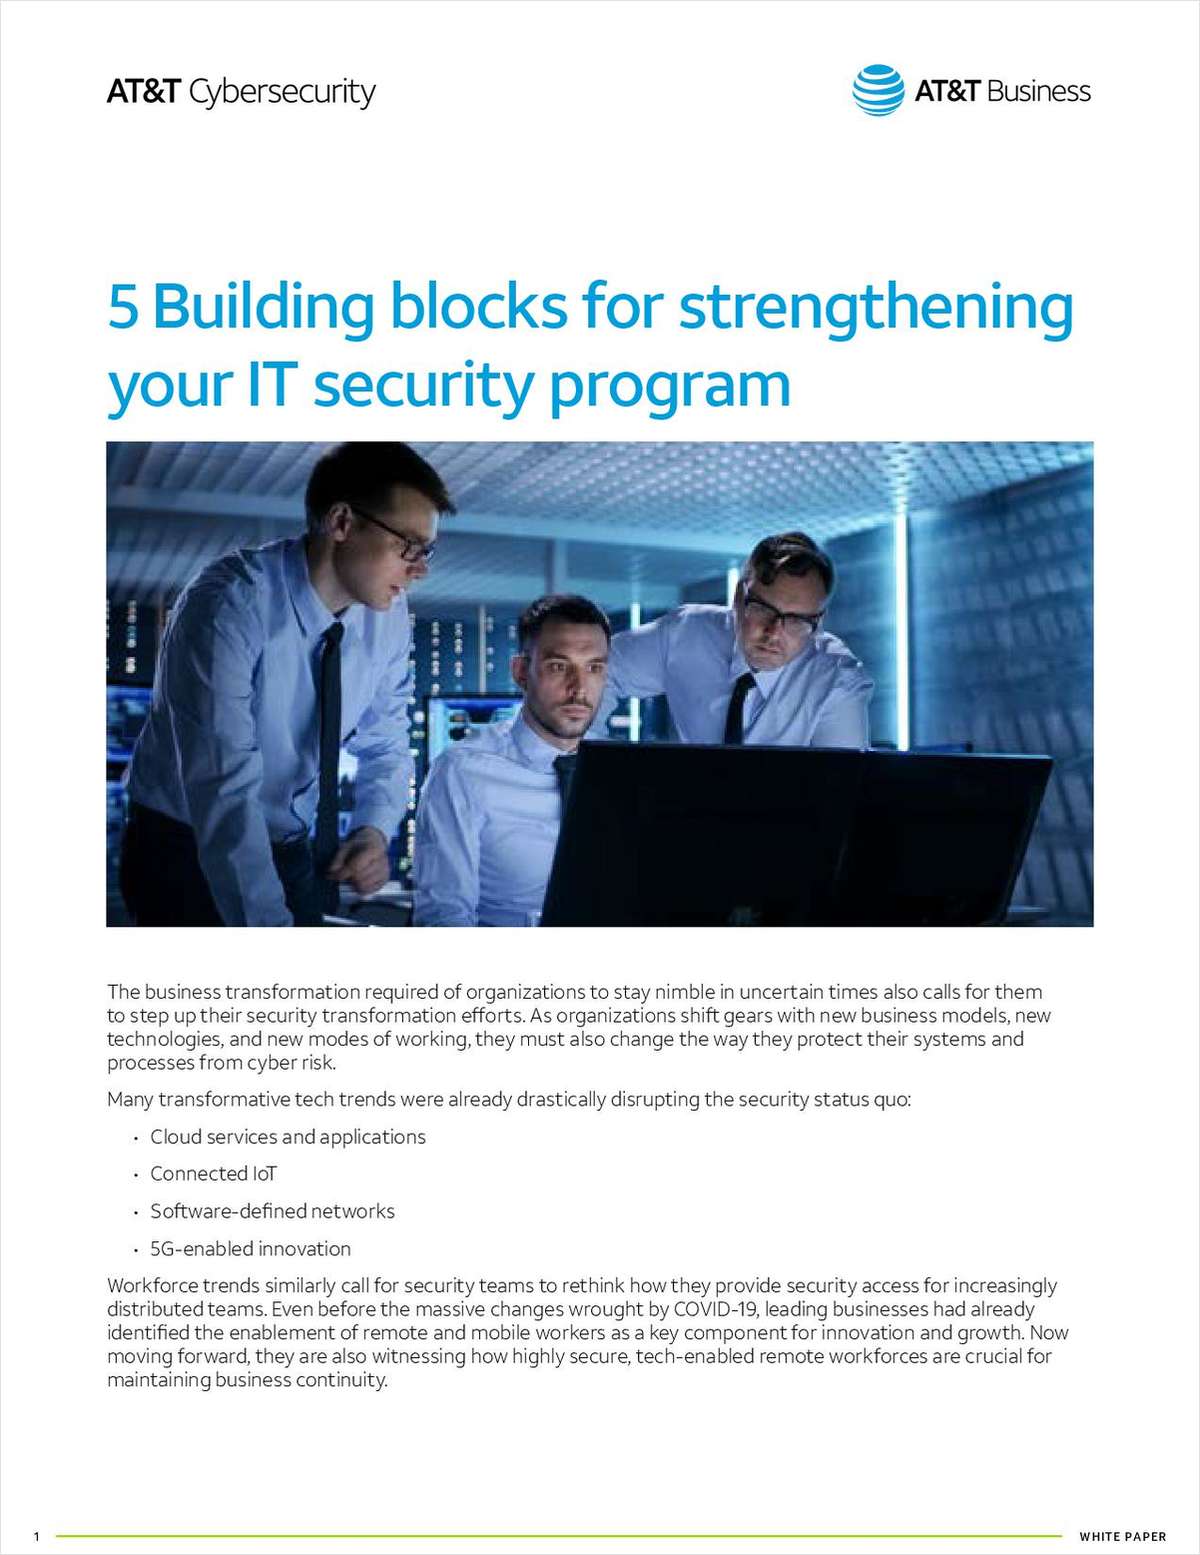 5 Building Blocks for Strengthening your IT Security Program